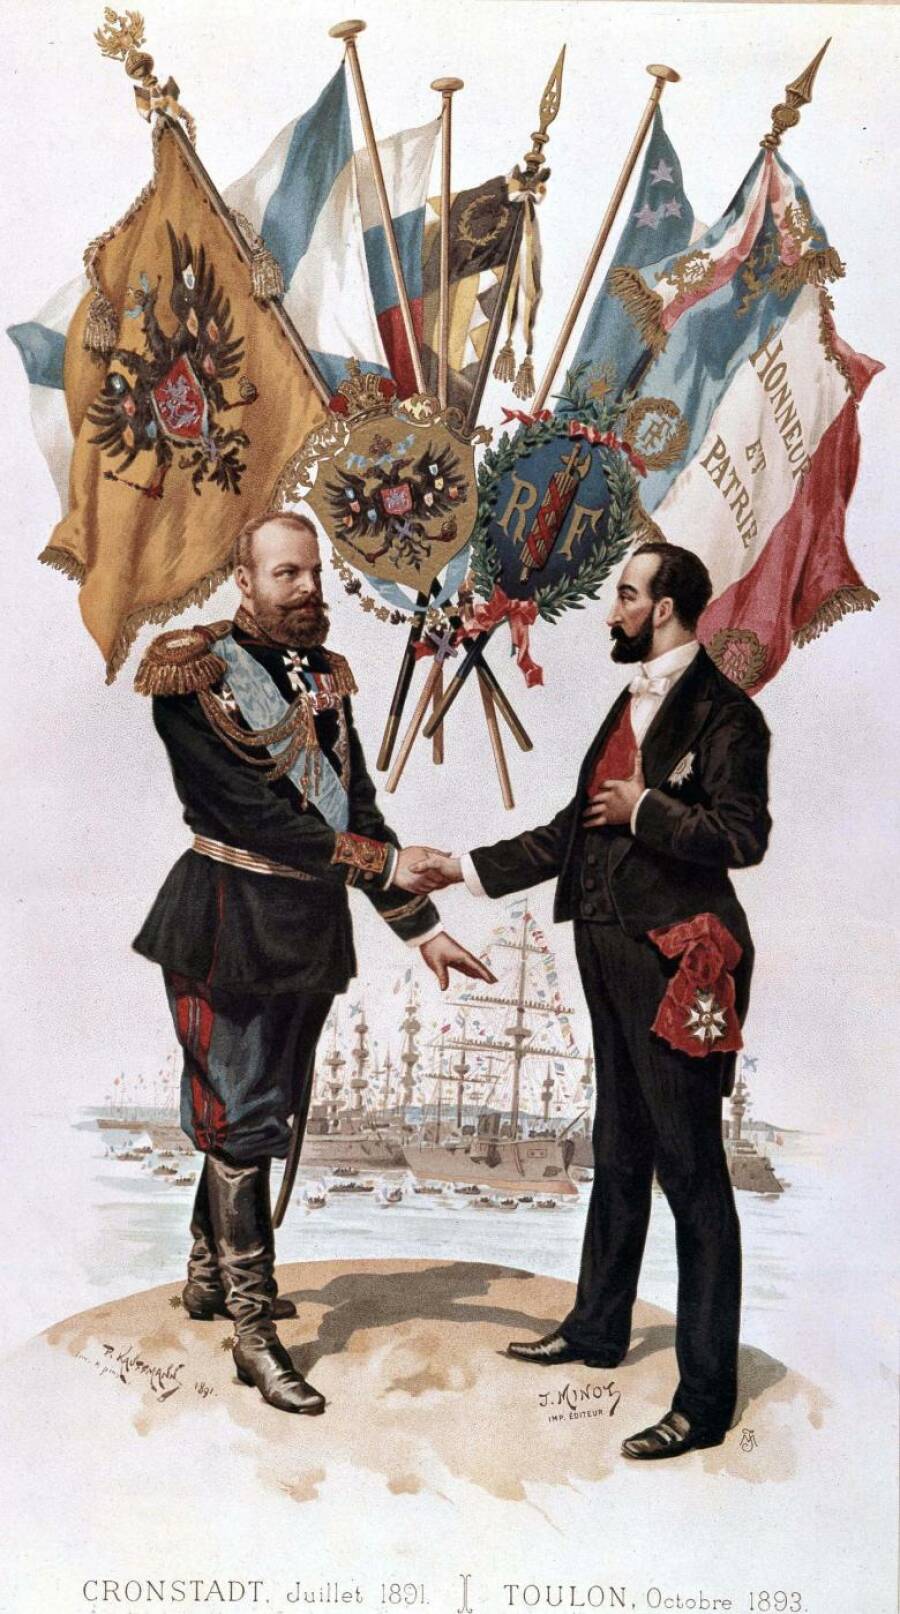 Император Александр III и президент Франции Мари Франсуа Сади Карно заключают союз, 1893 год